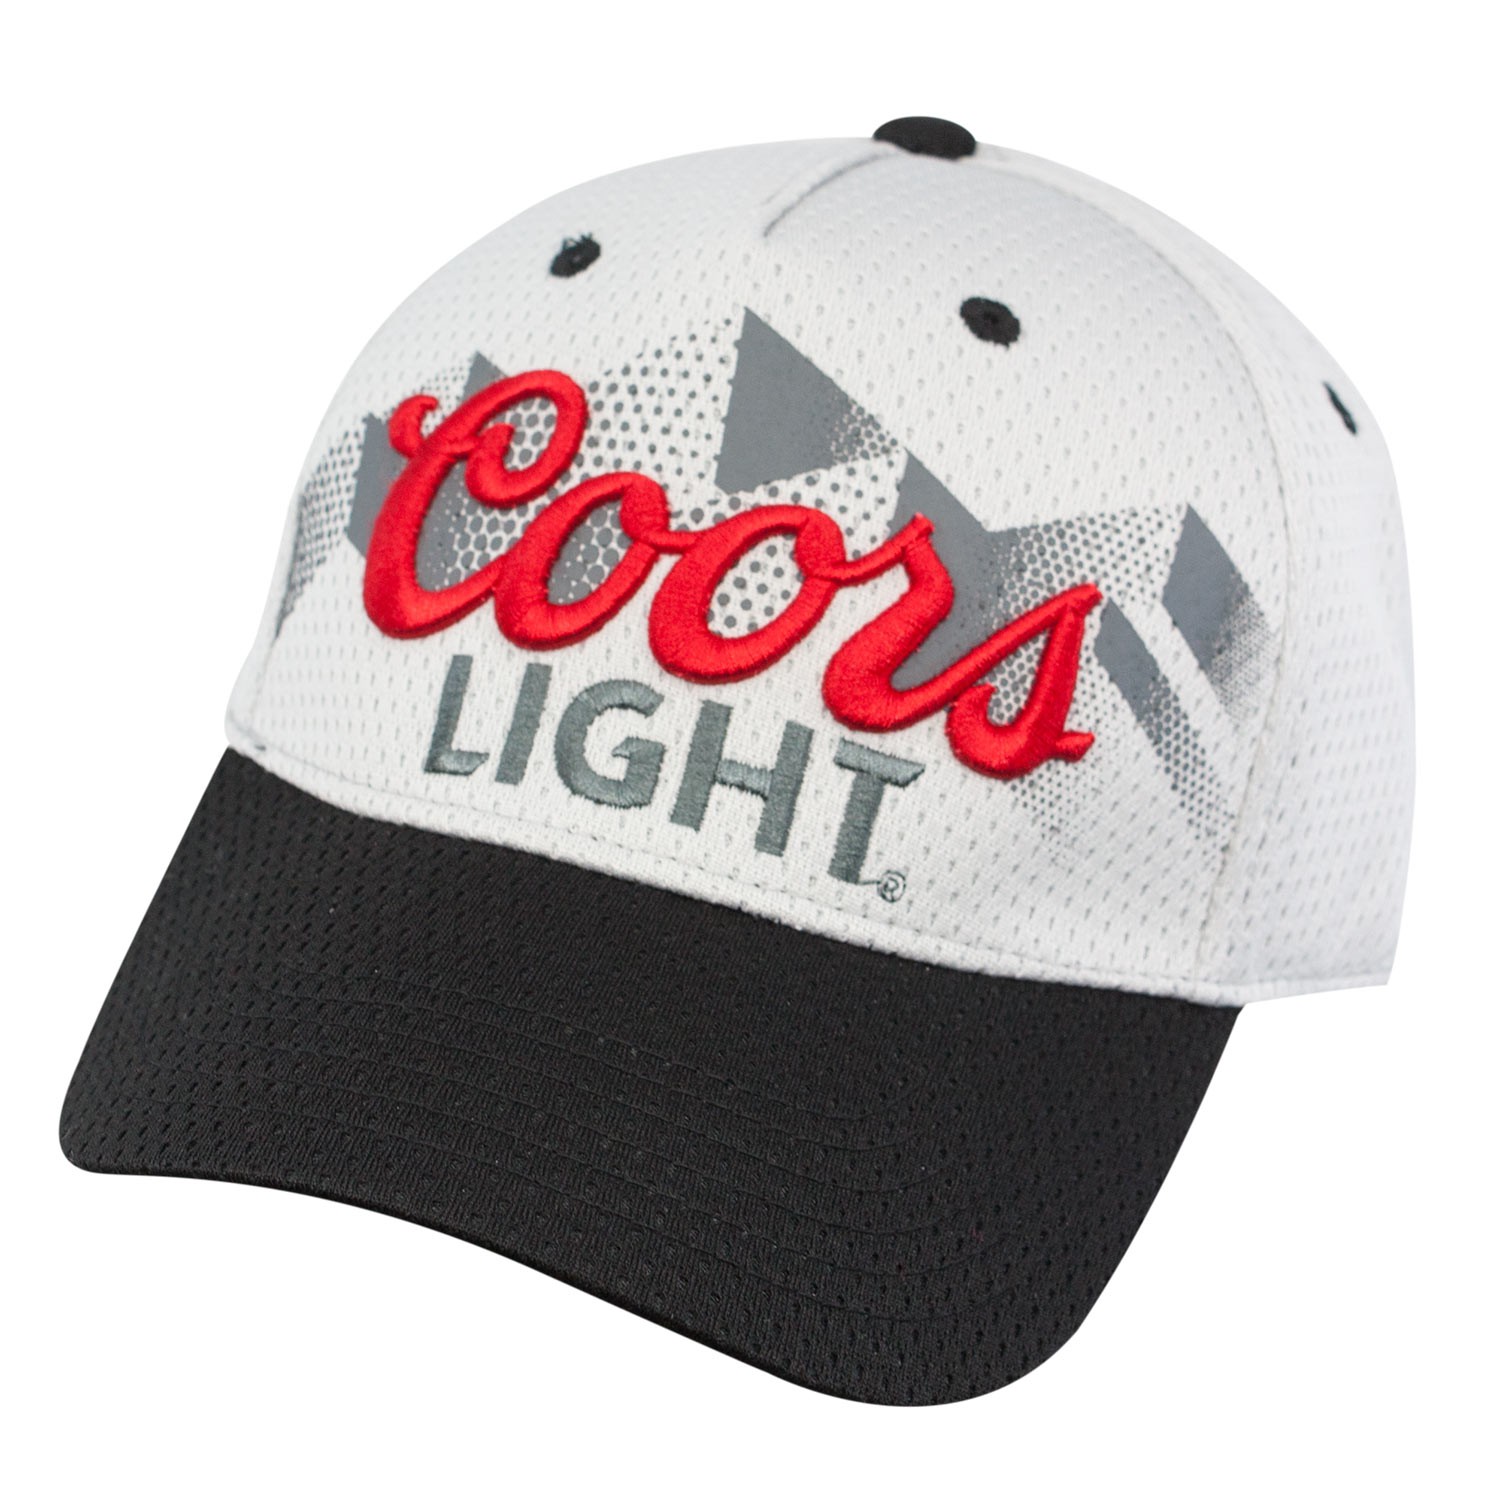 Coors Light Grey Mesh Hat